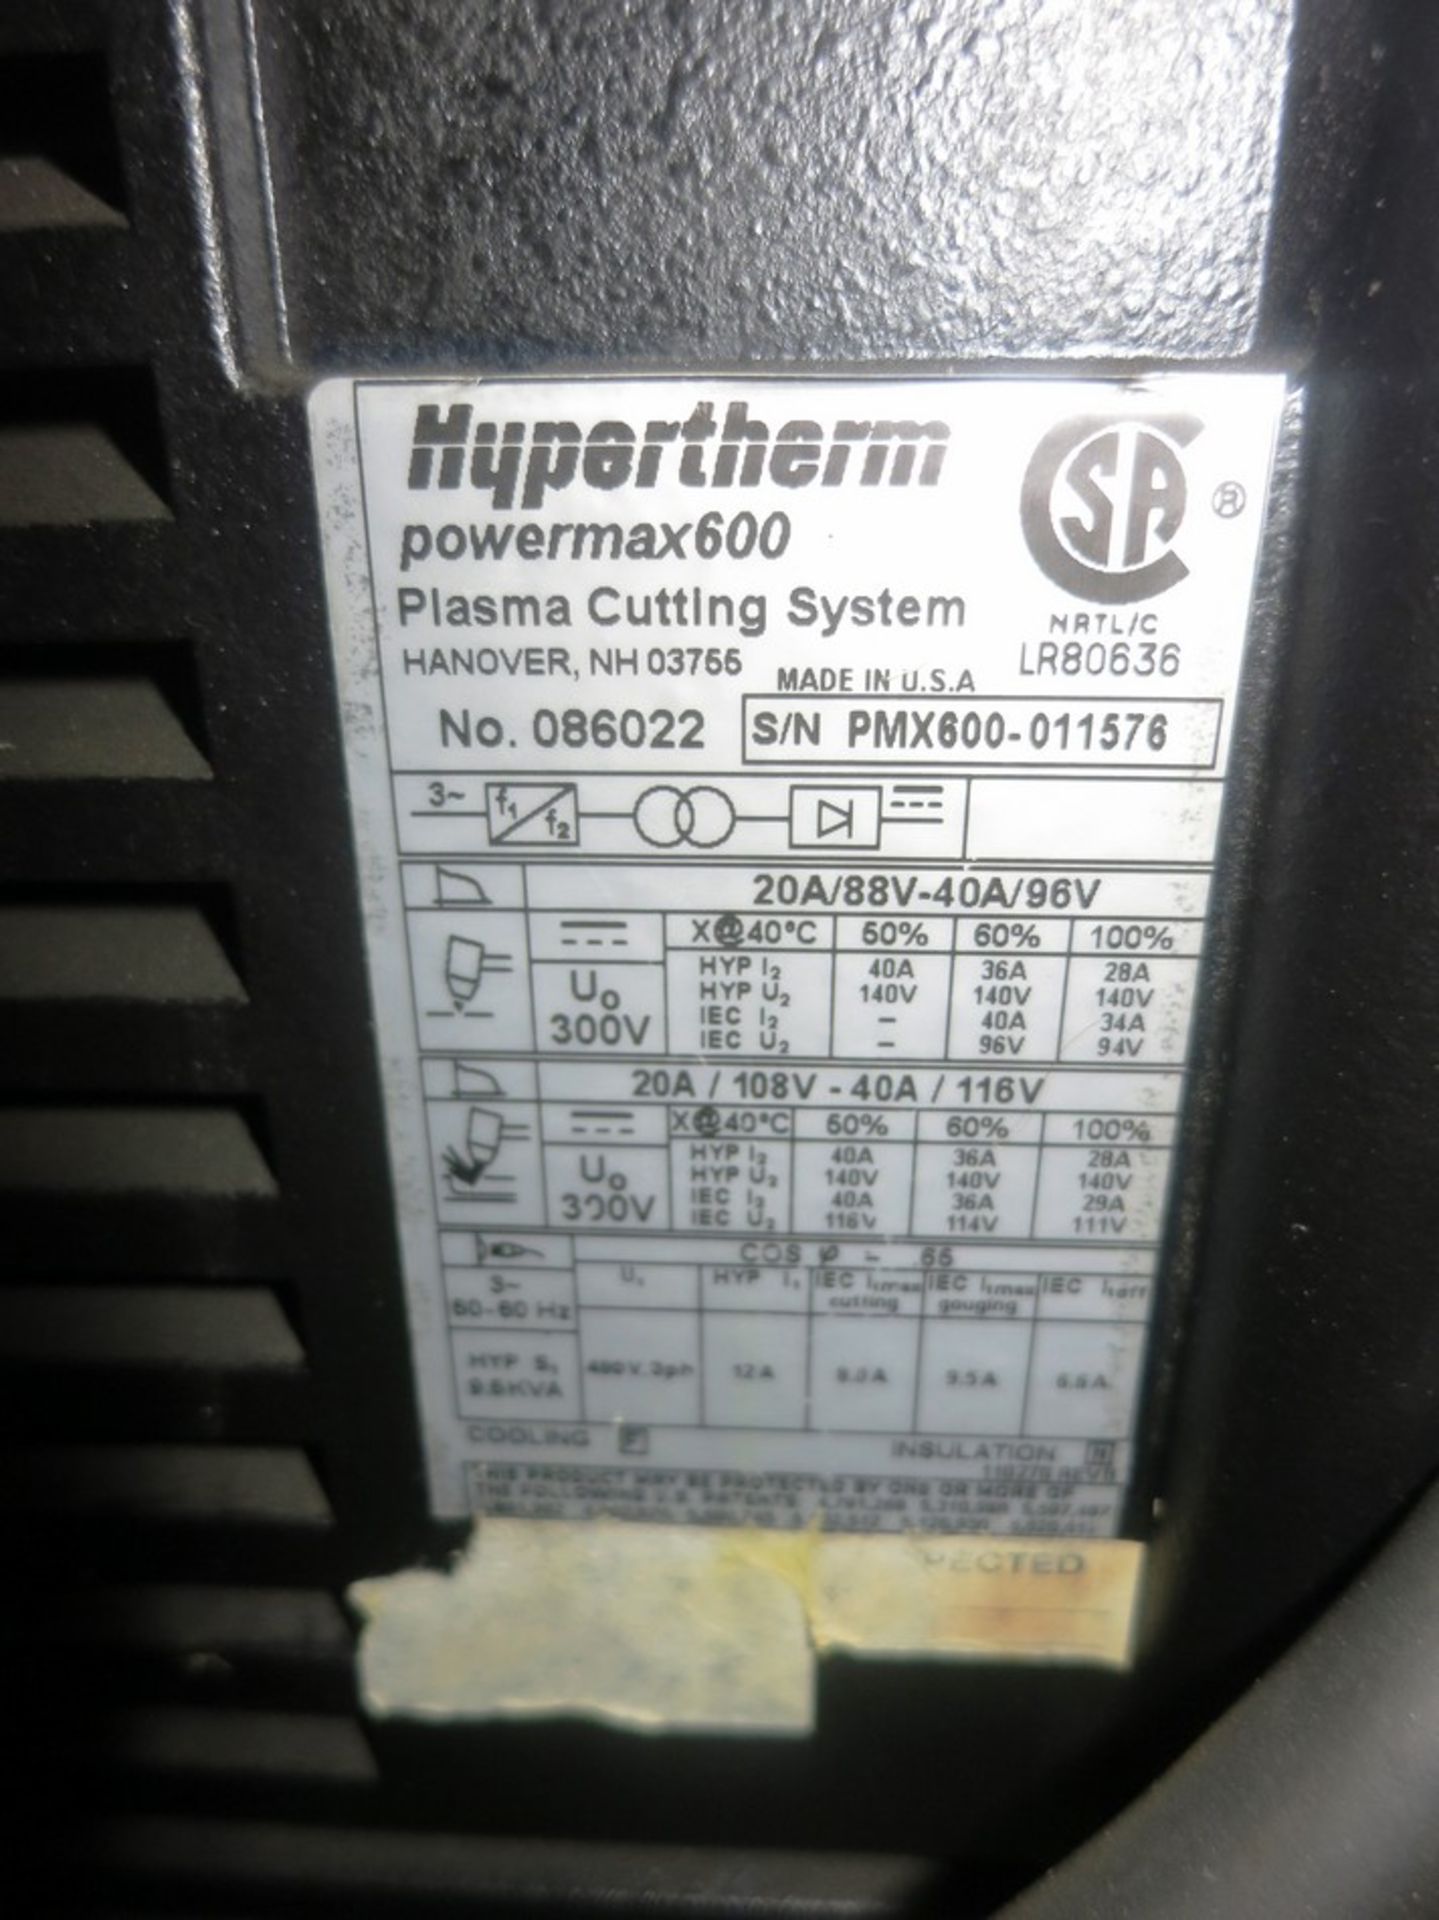 Hypertherm Powermax 600 Plasma Cutting Torch S/N: Pmx600-011576 - Image 3 of 3